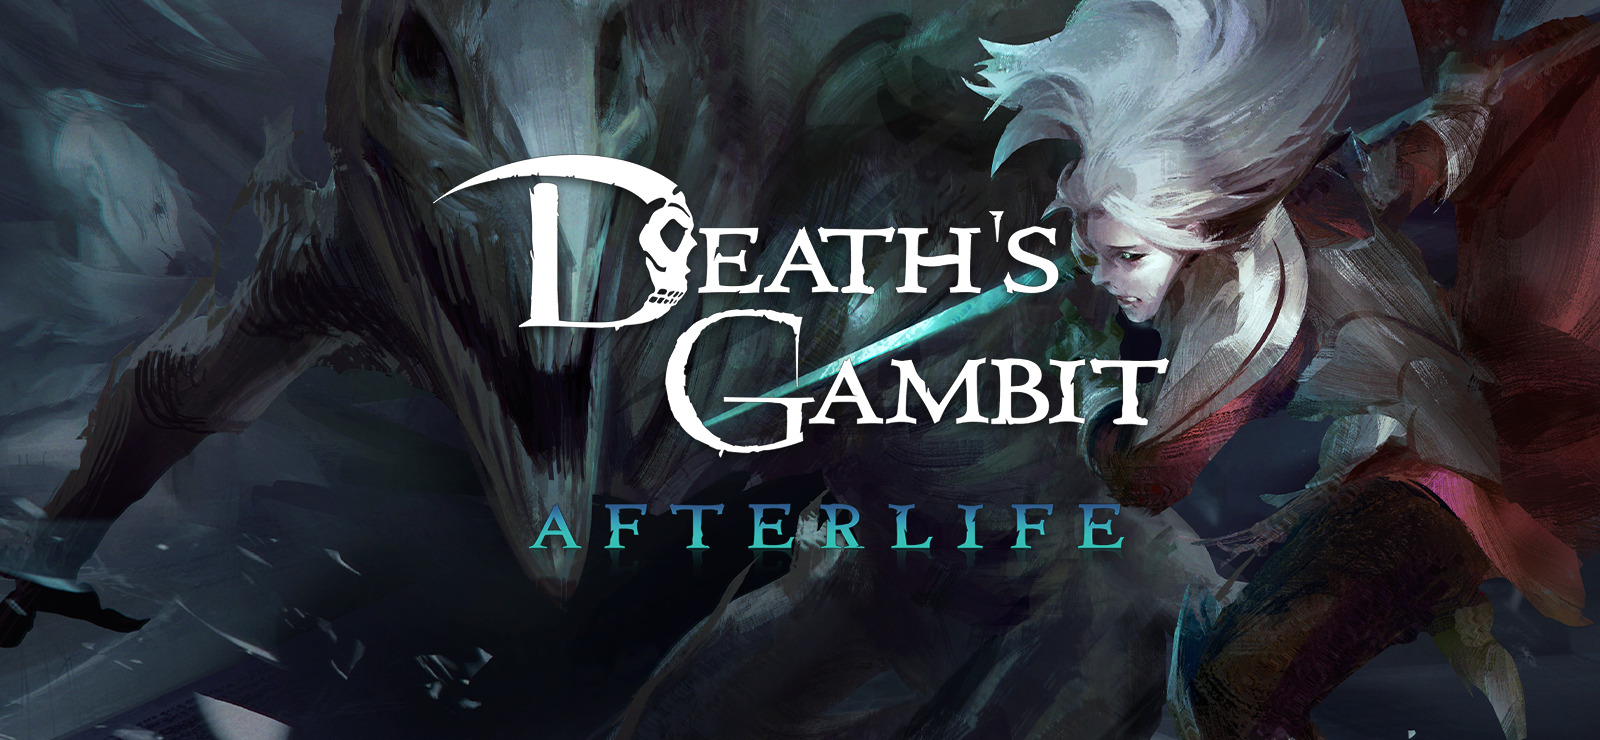 Death's Gambit - Vrael dialog on Vimeo